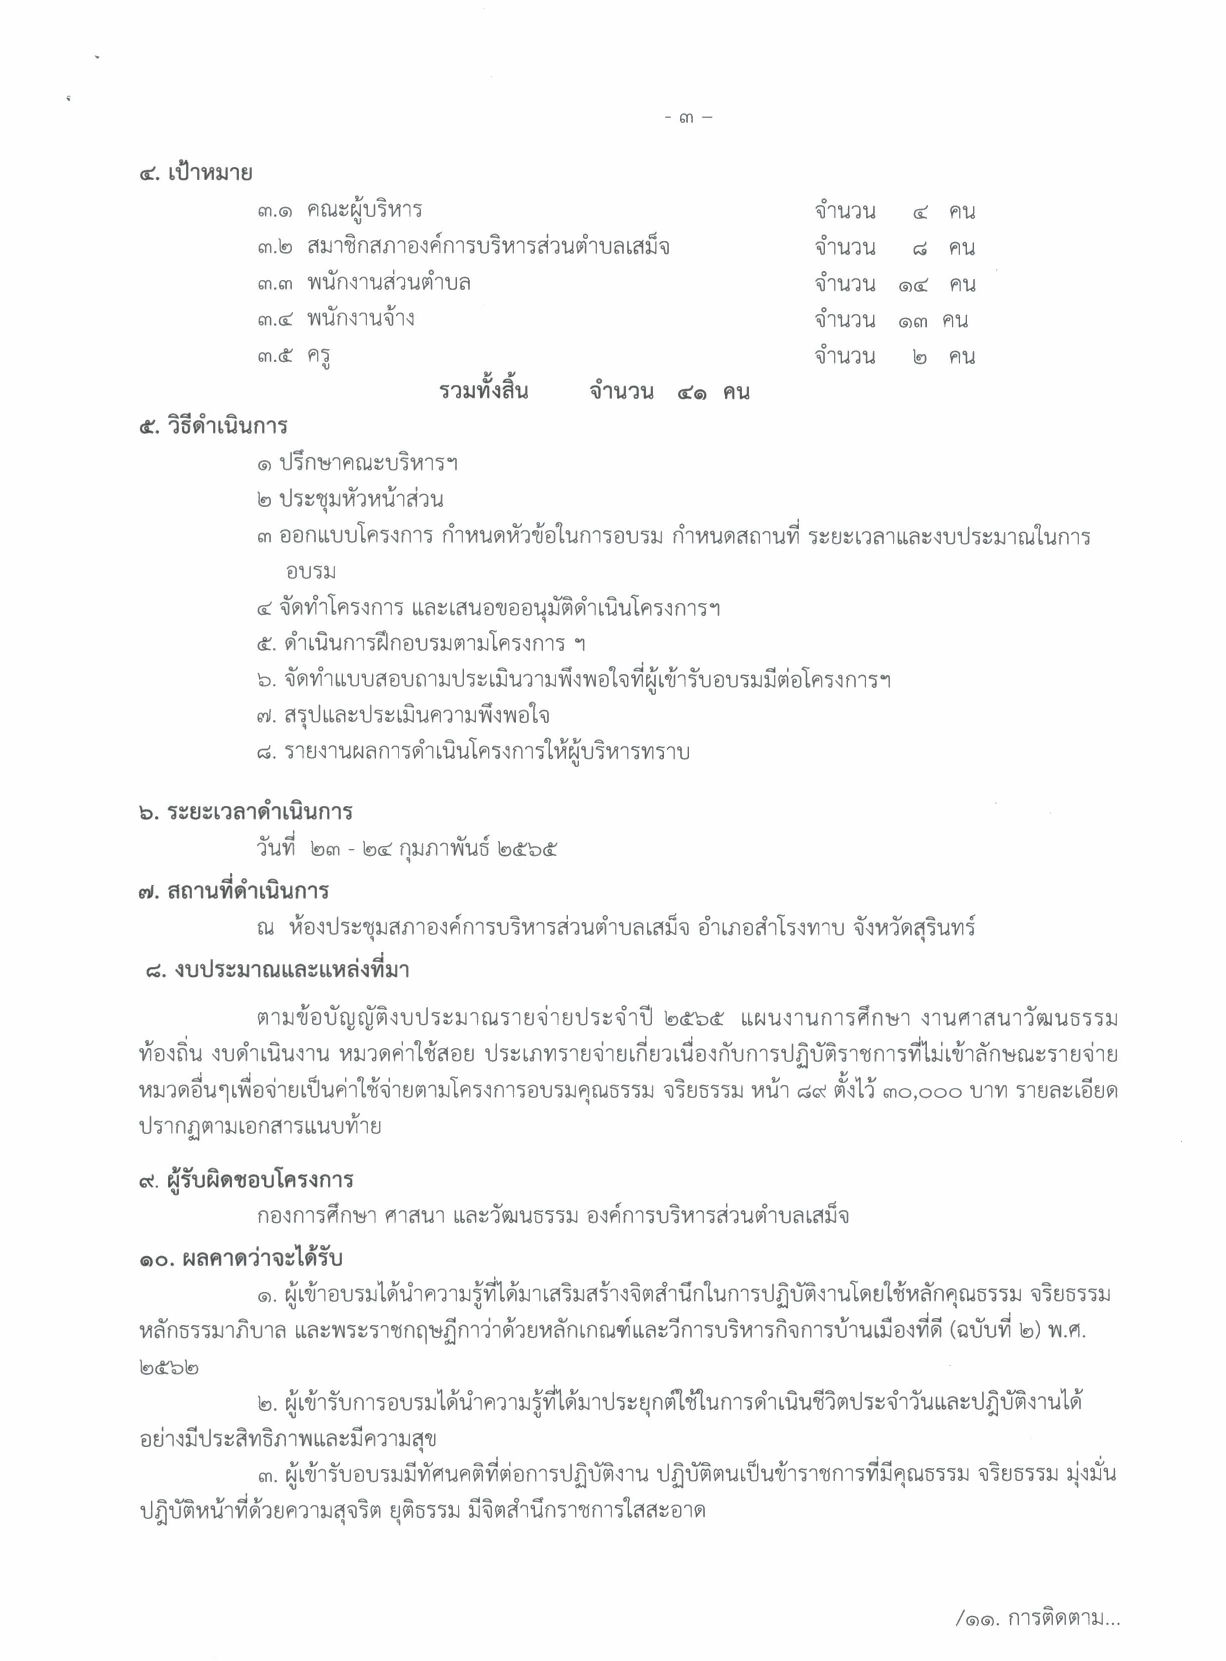 Krongkankunnatum2565 page 0003